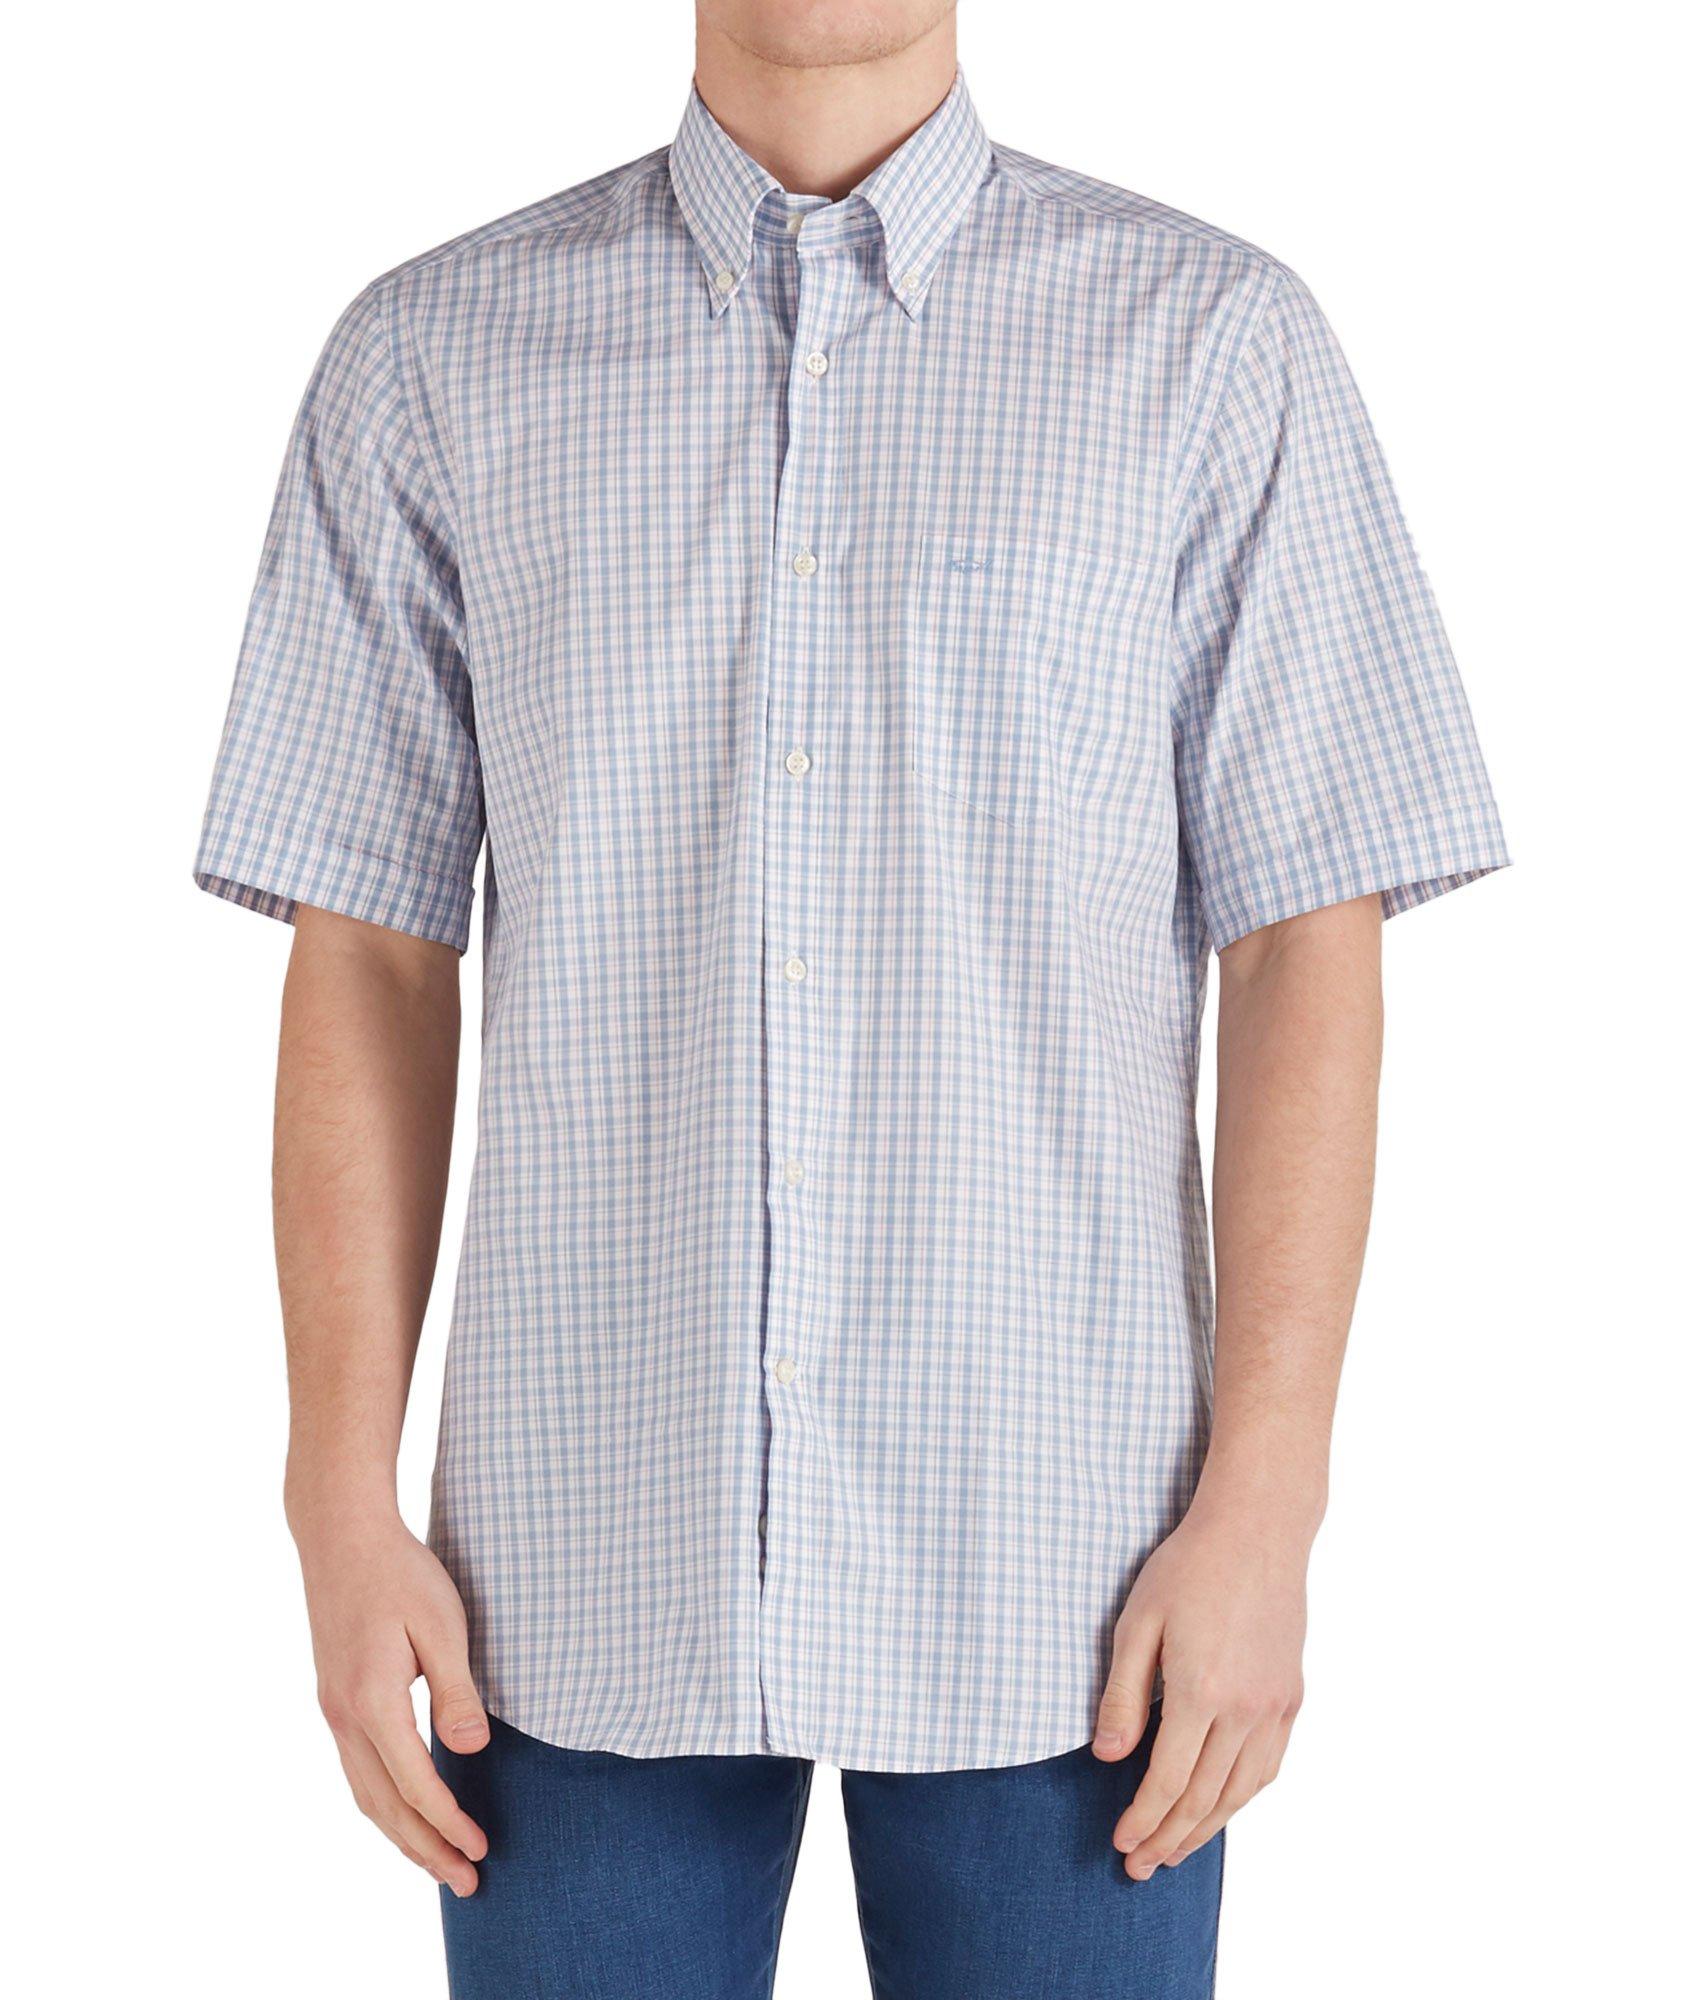 Short-Sleeve Checked Cotton Shirt image 0